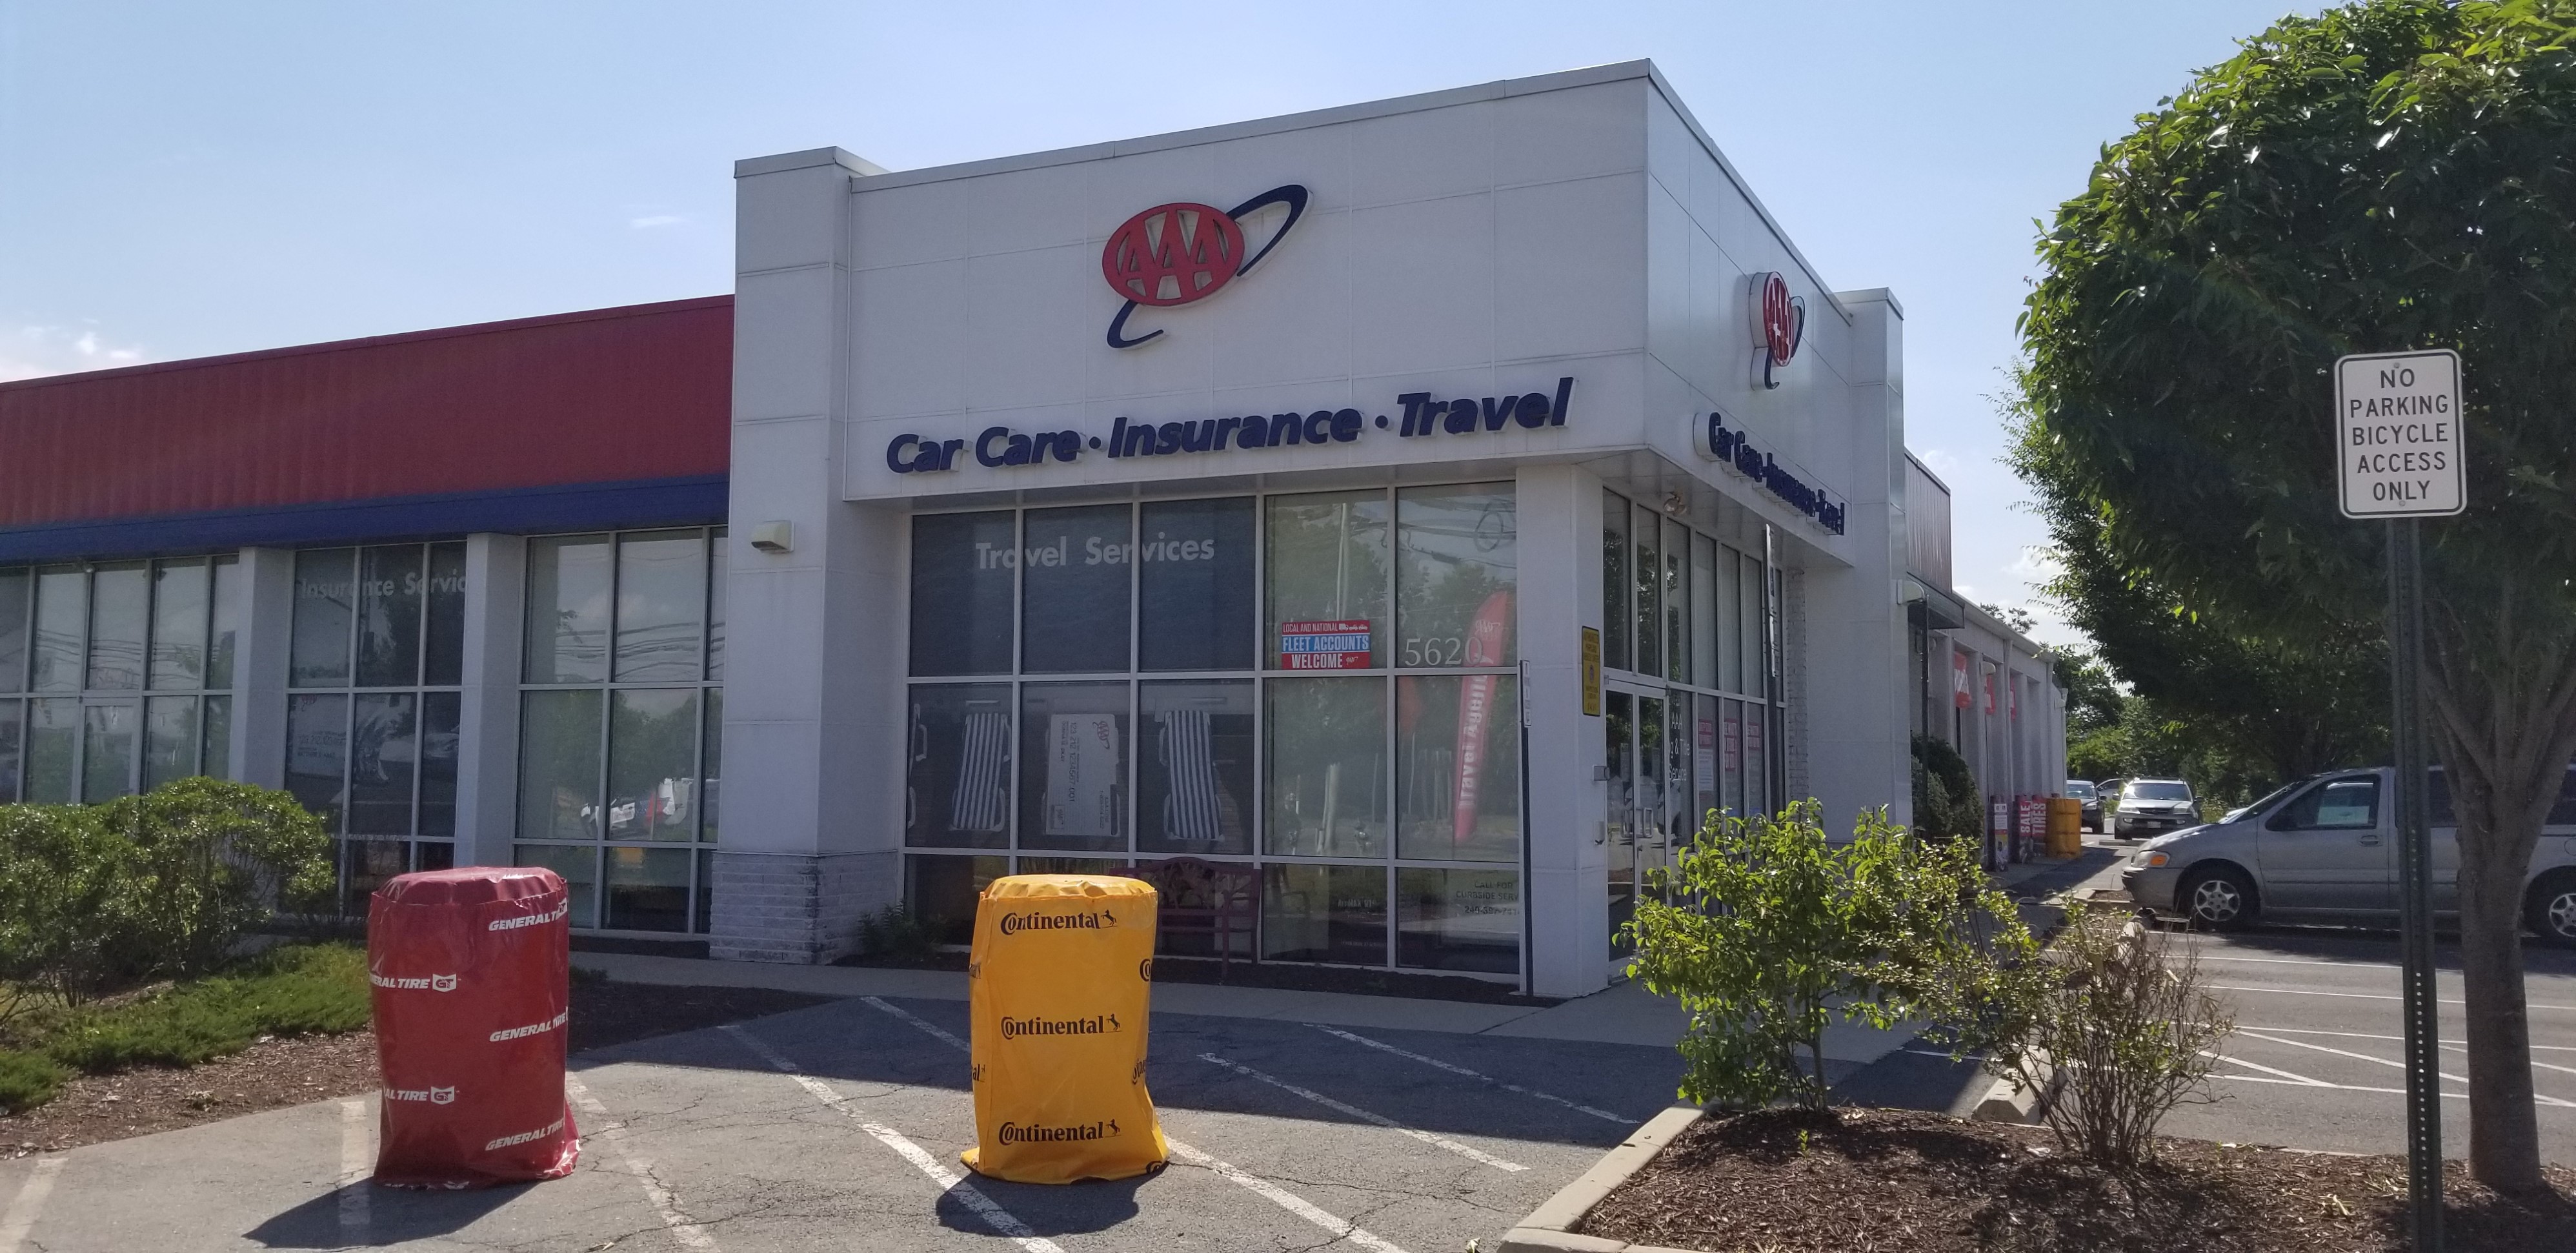 AAA Frederick Car Care Insurance Travel Center Photo